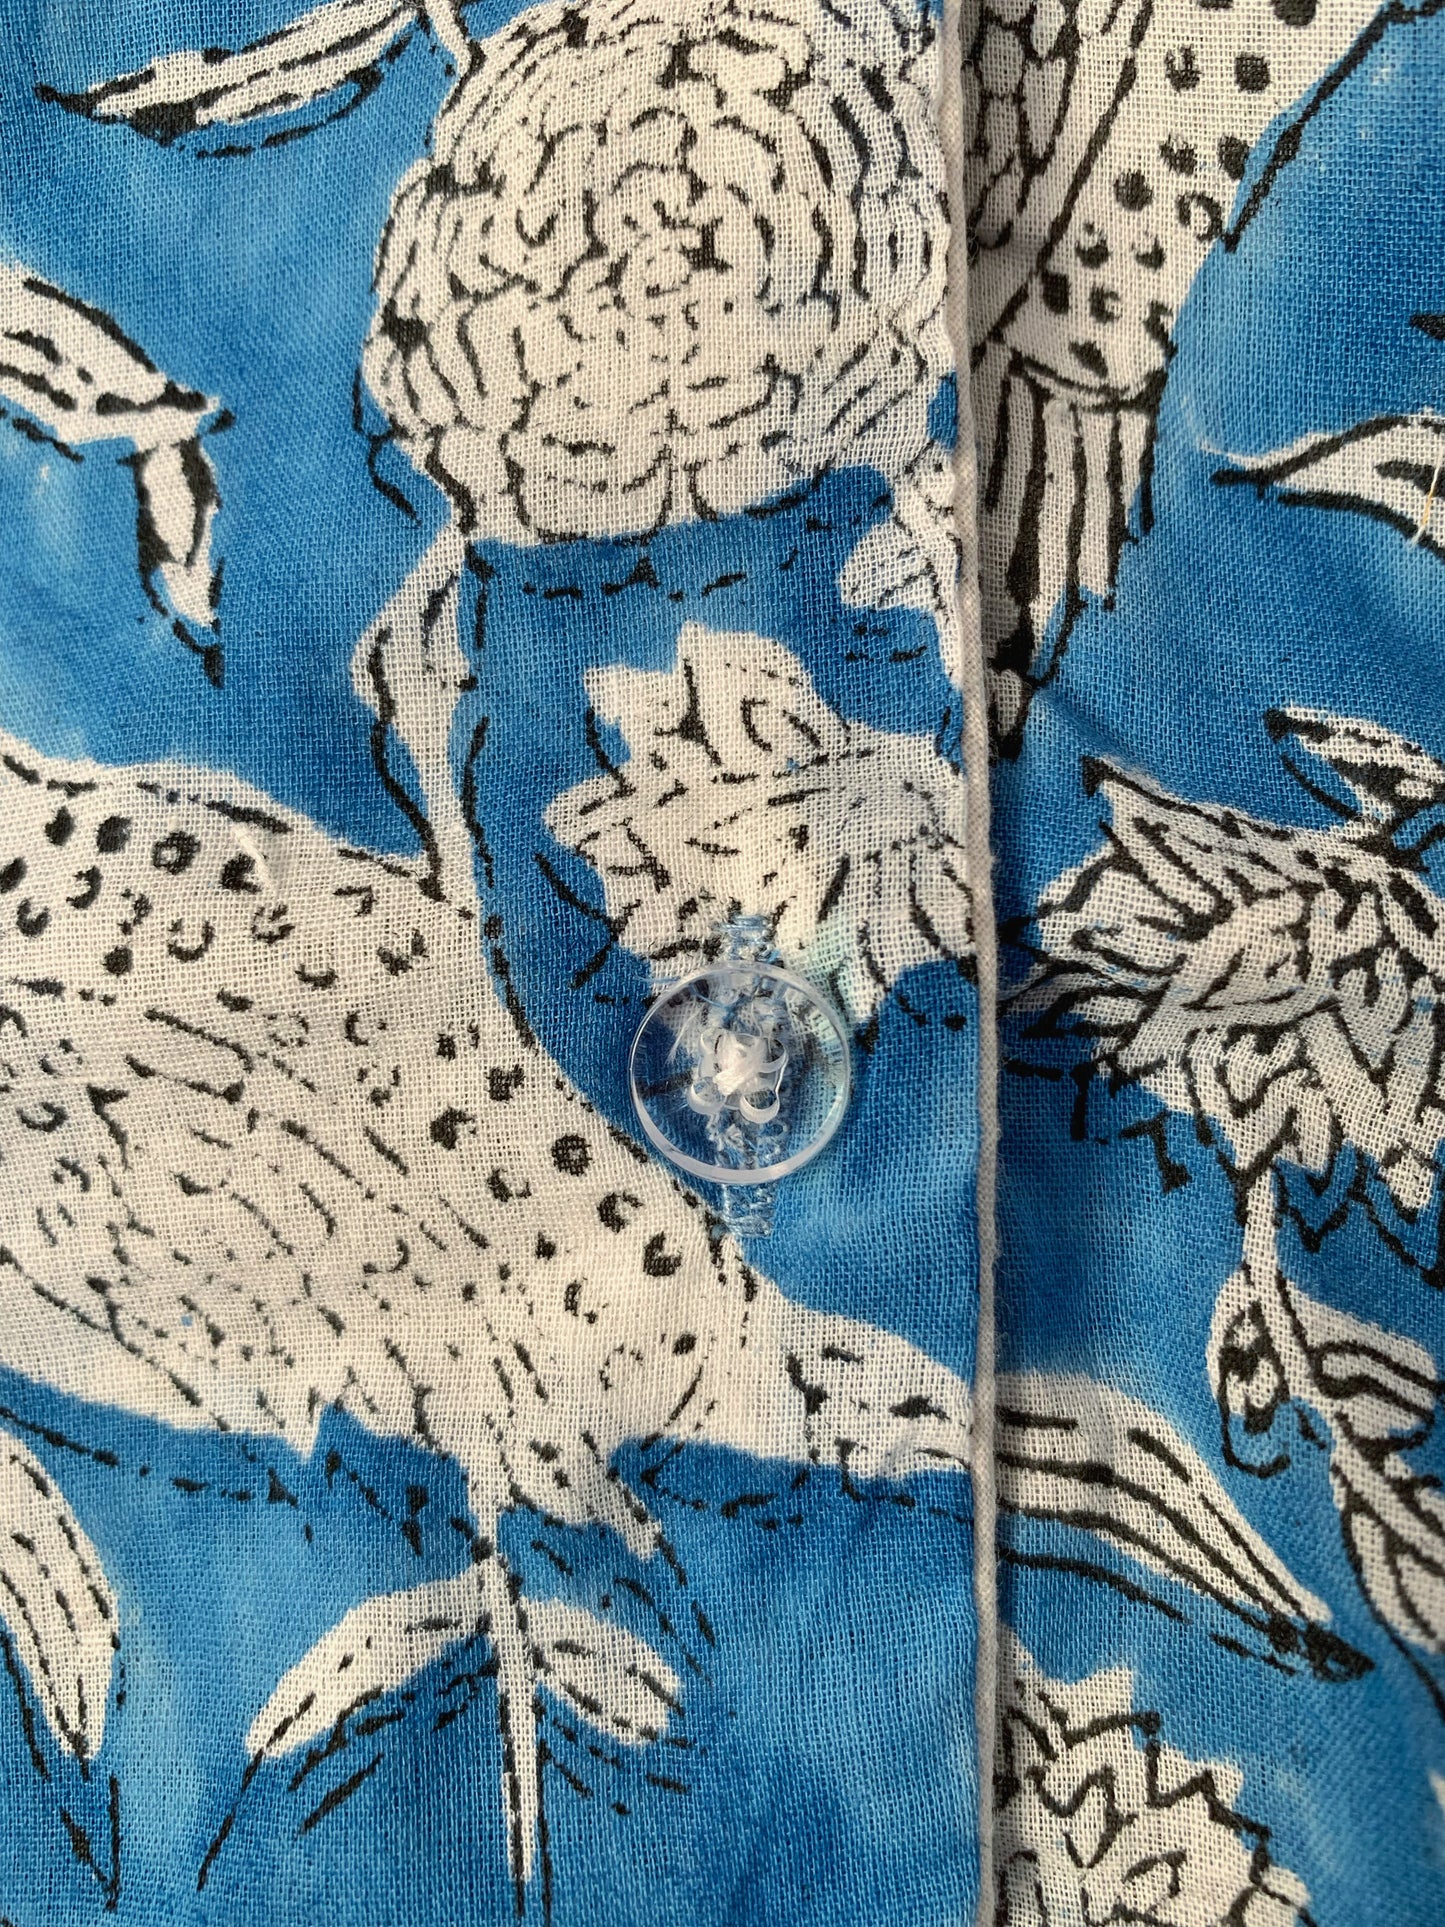 SET regalo · Pijama manga/pantalón corto & bolsa aseo a juego · Algodón puro estampado block print artesanal en India · Azul